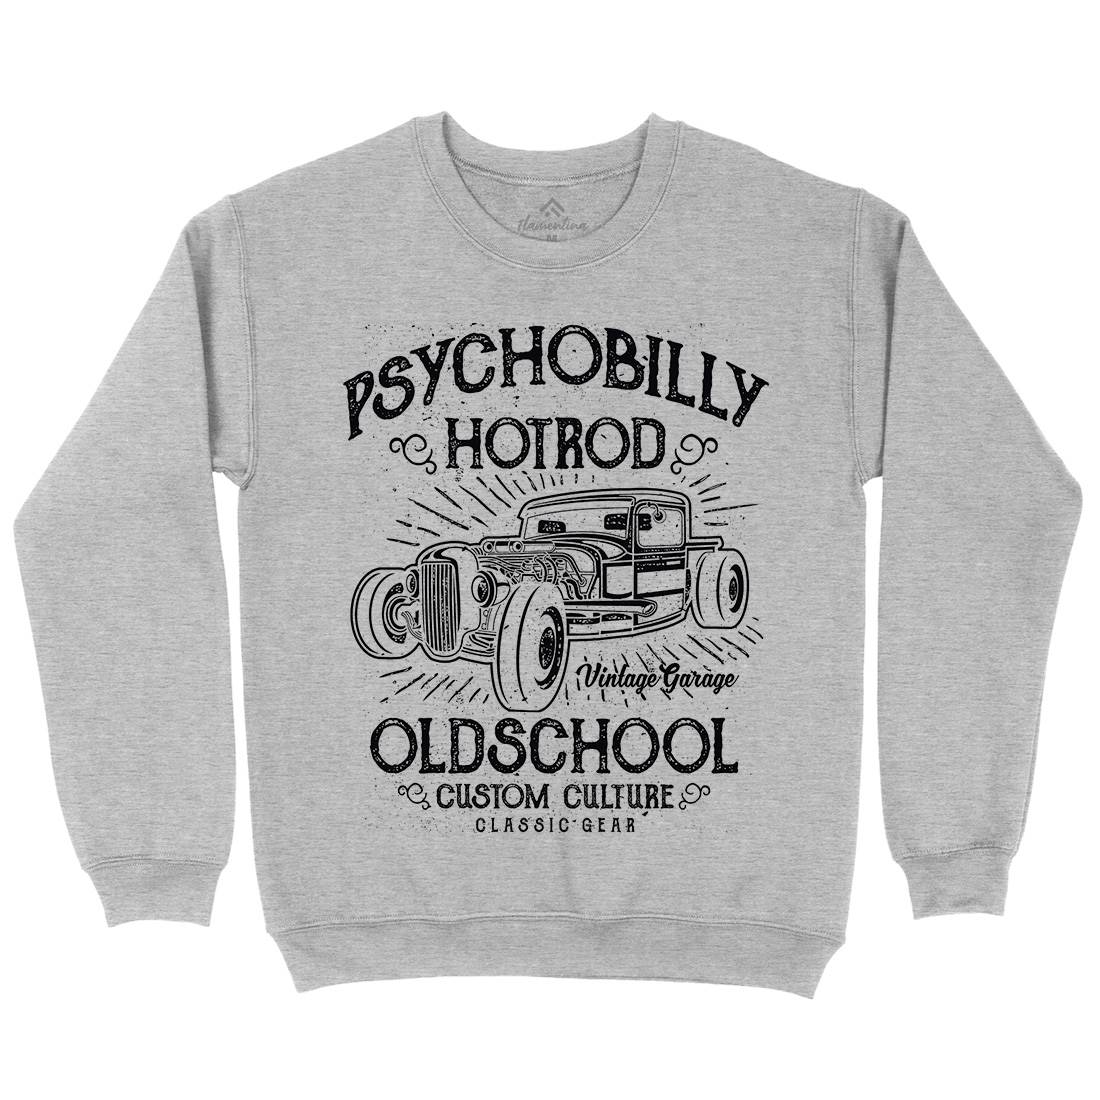 Psychobilly Hotrod Kids Crew Neck Sweatshirt Cars A113